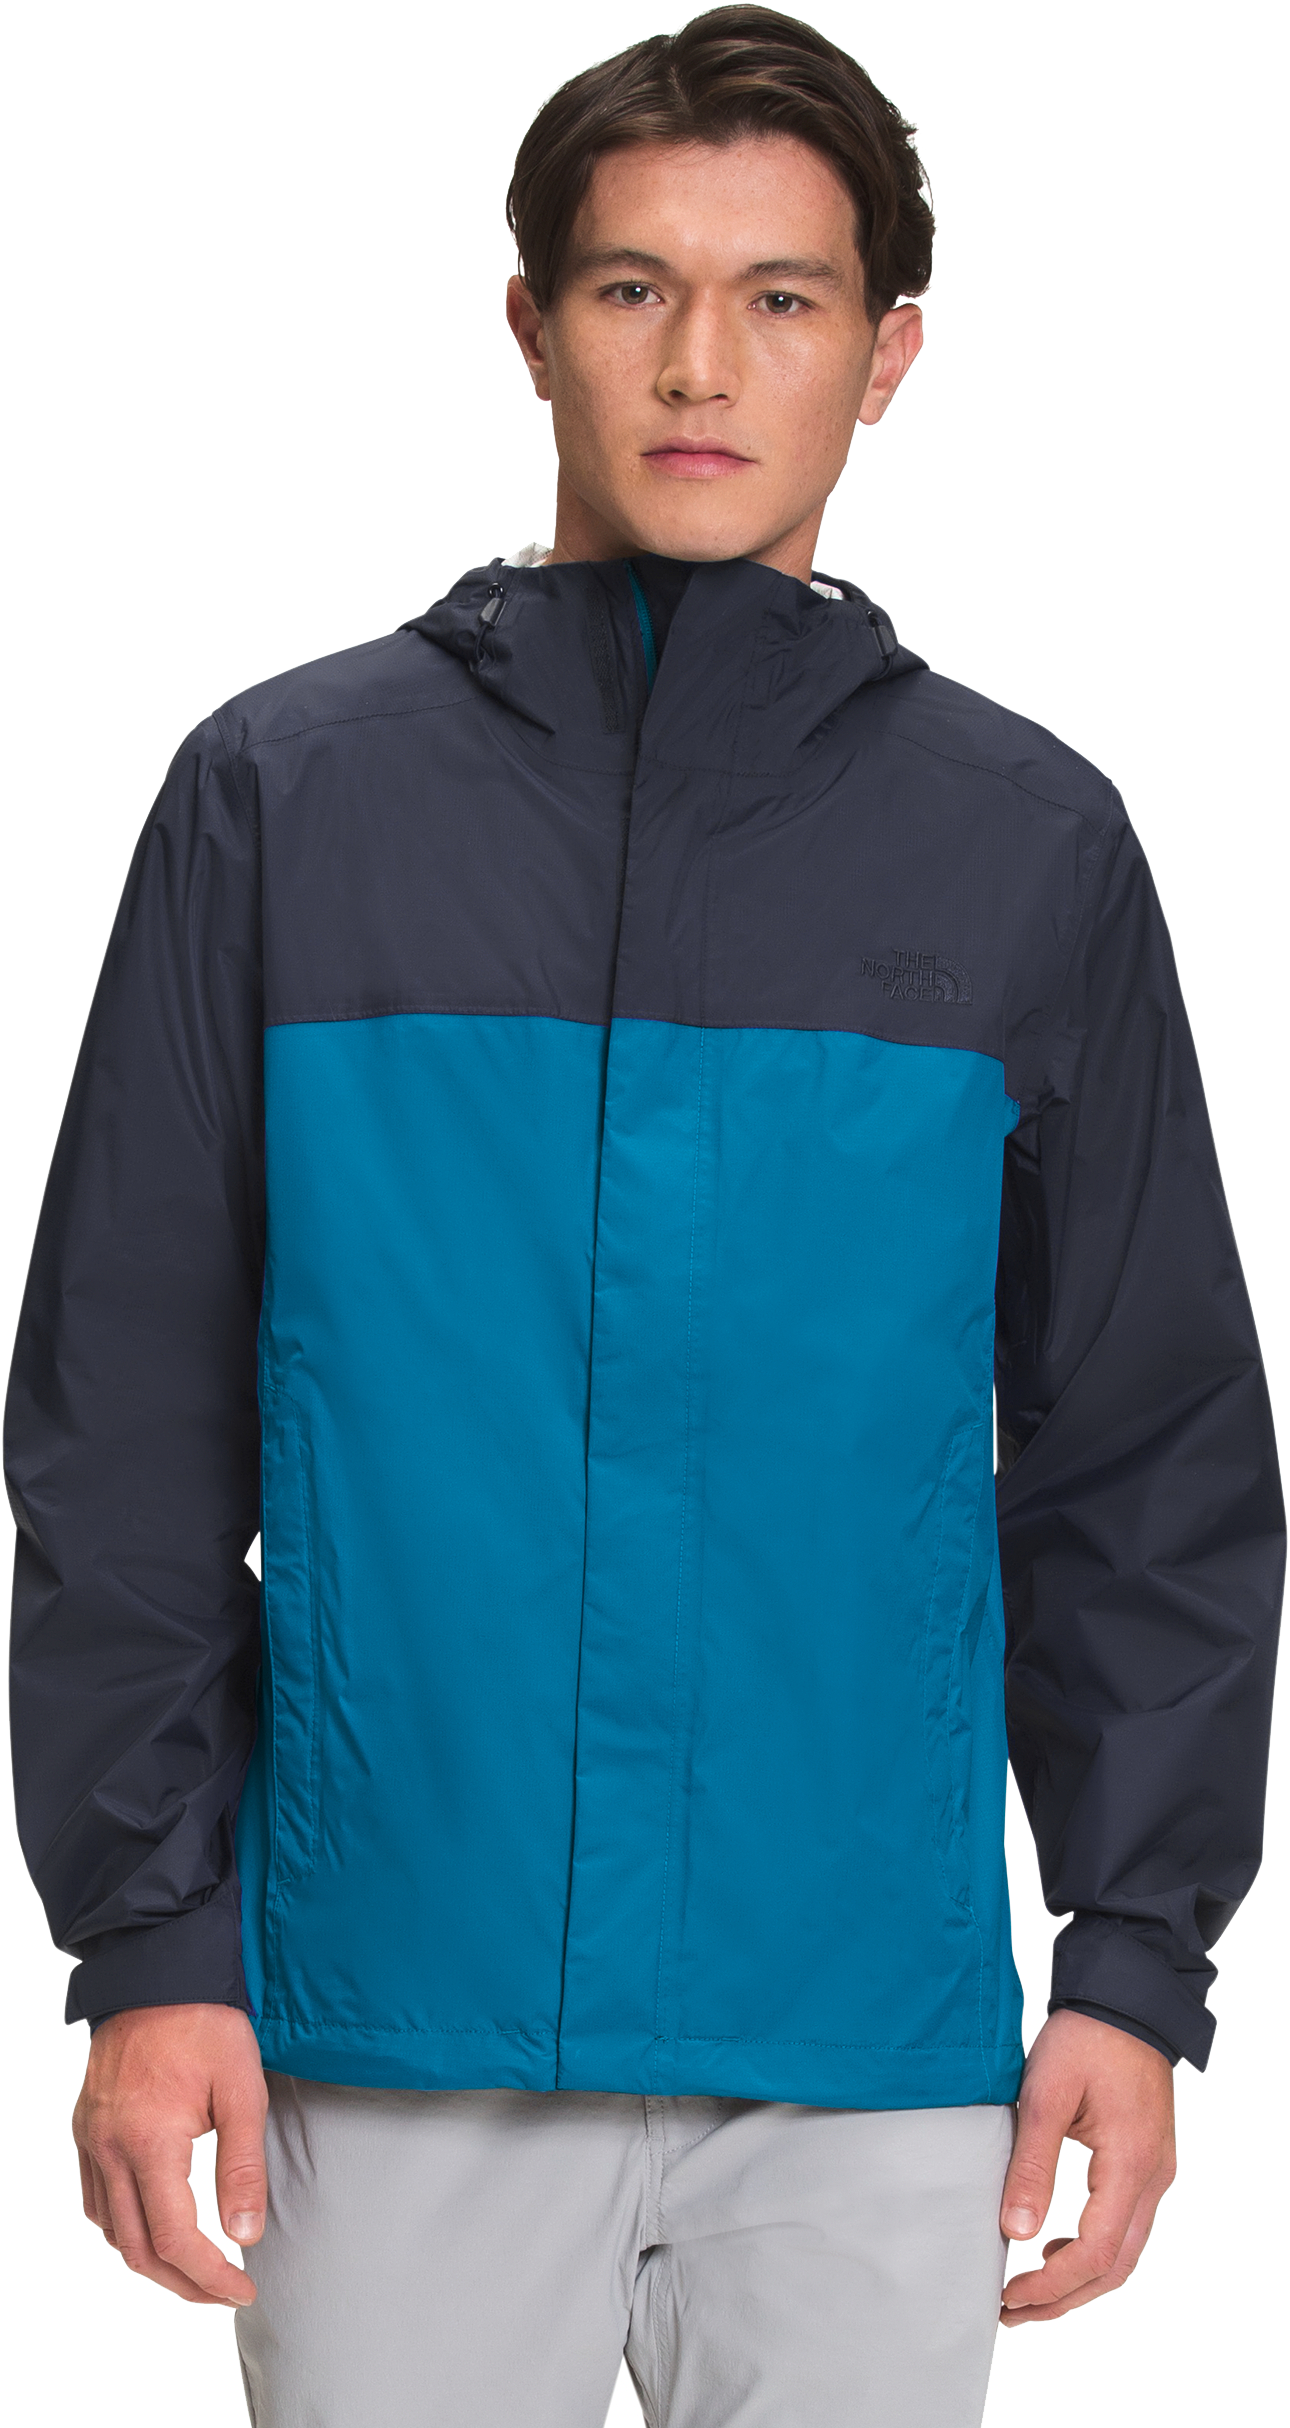 The North Face Venture 2 Jacket for Men - Aviator Navy/Banff Blue - S